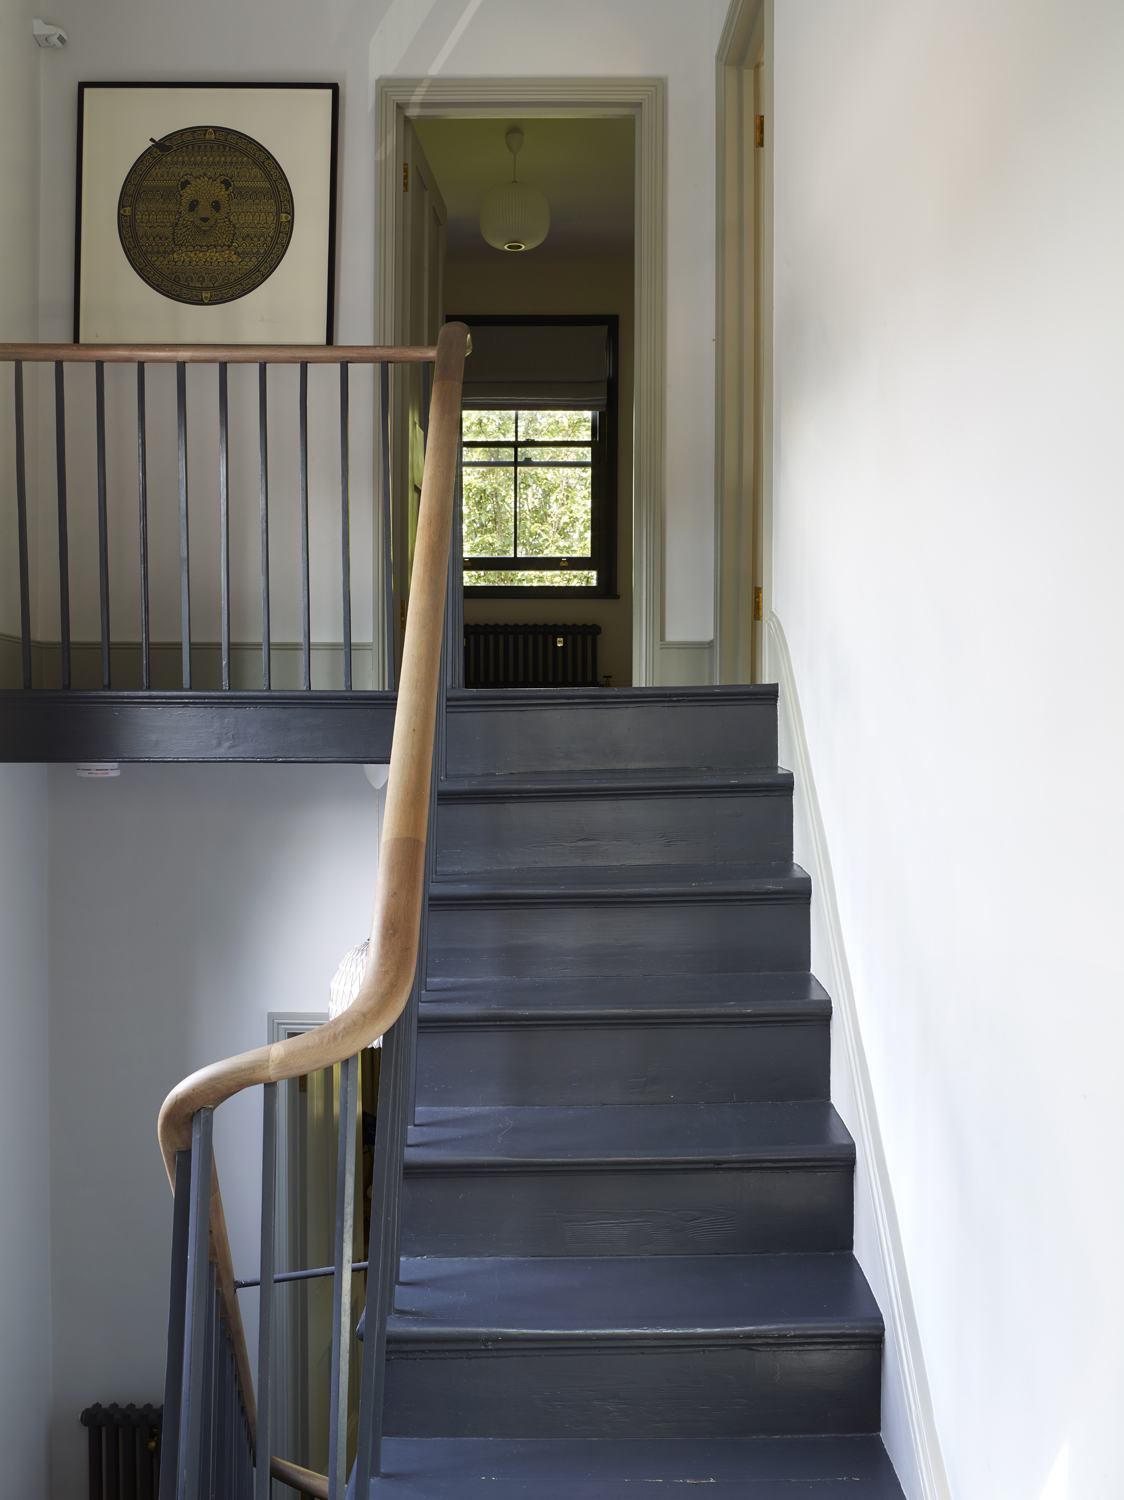 evoke projects ltd GR renovated victorian stairwell